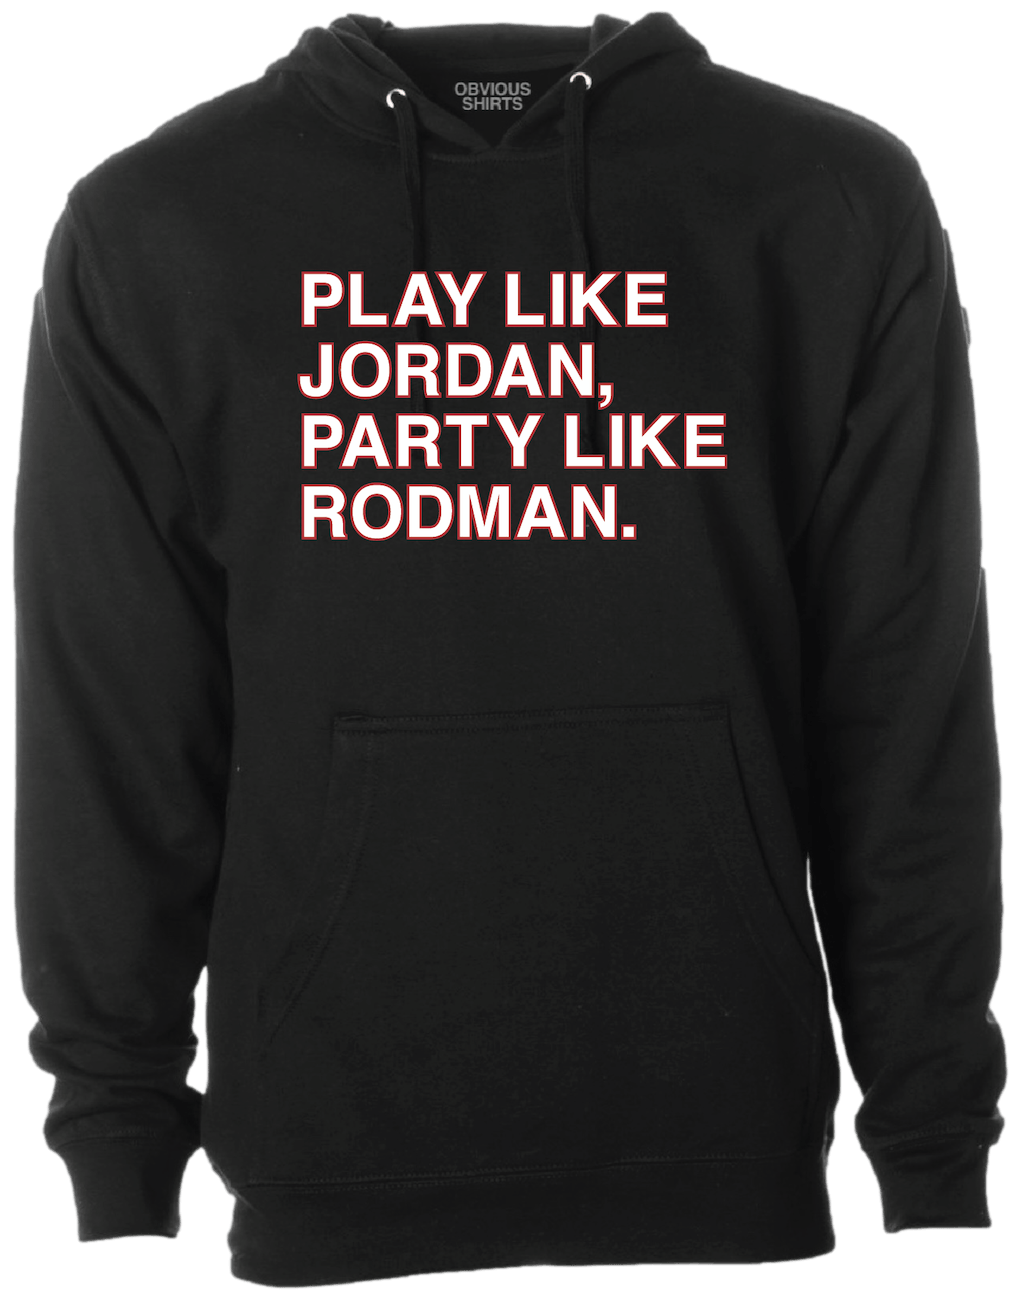 PLAY LIKE JORDAN, PARTY LIKE RODMAN. (HOODED SWEATSHIRT) - OBVIOUS SHIRTS